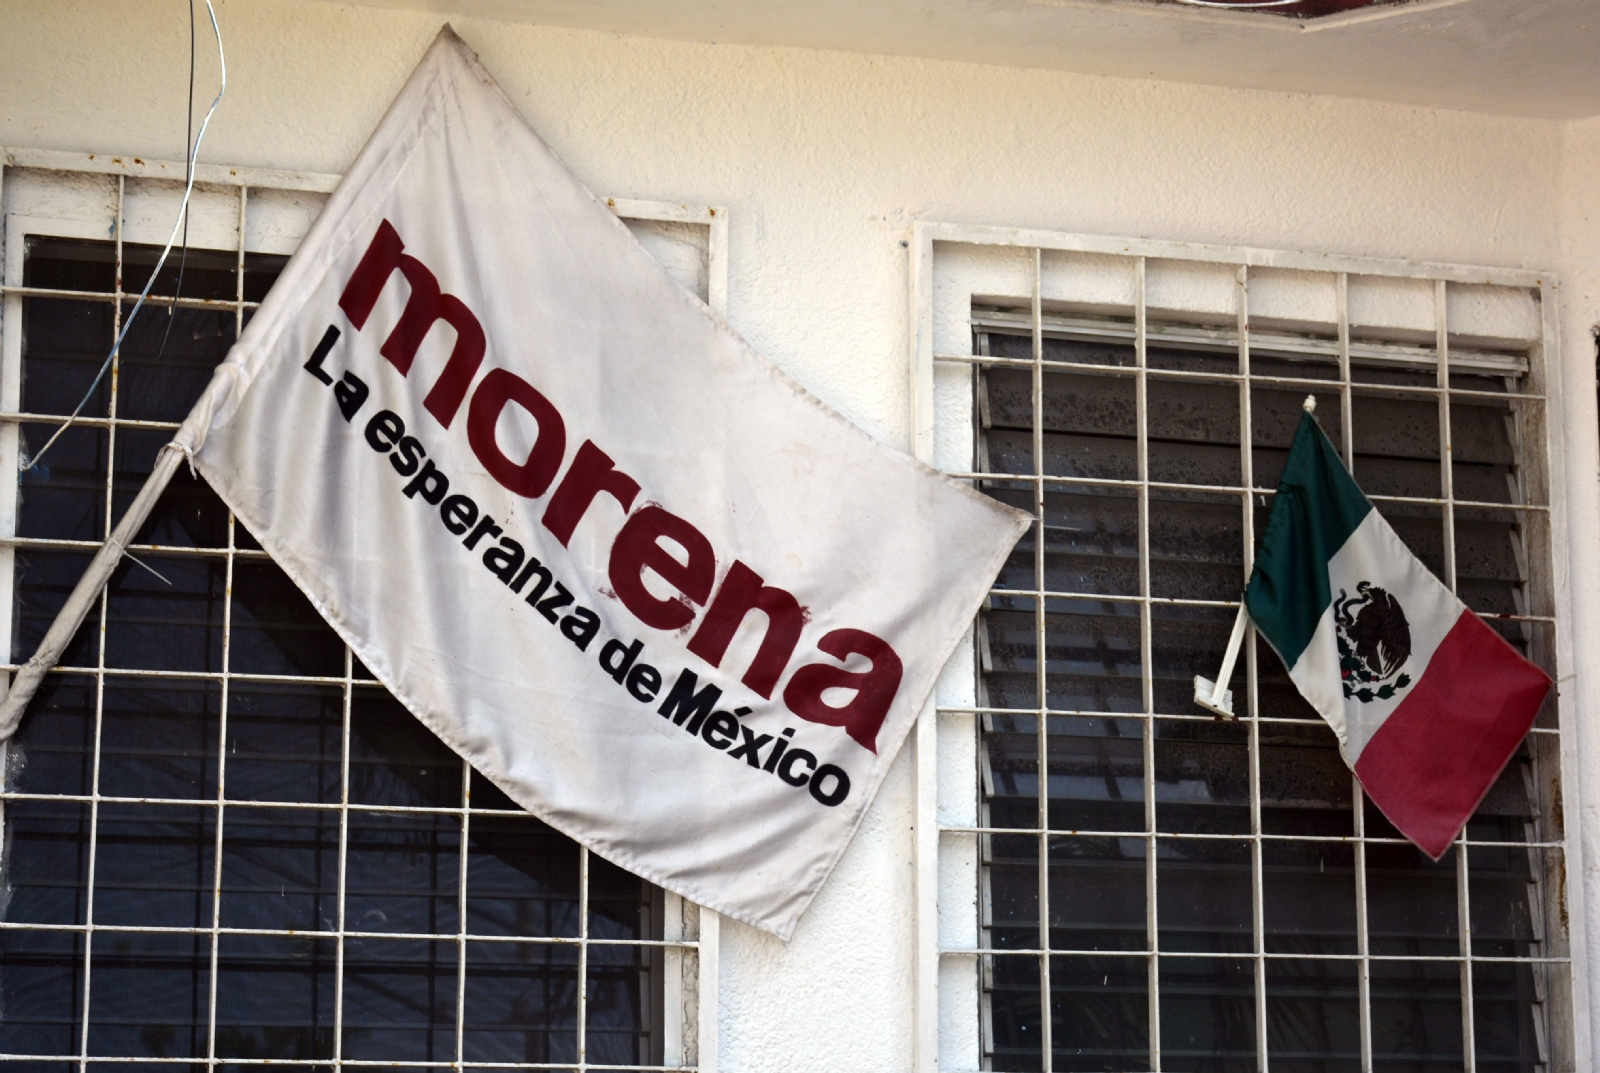 Gobernadores de Morena en México rechazan el ingreso de militares de Estados Unidos